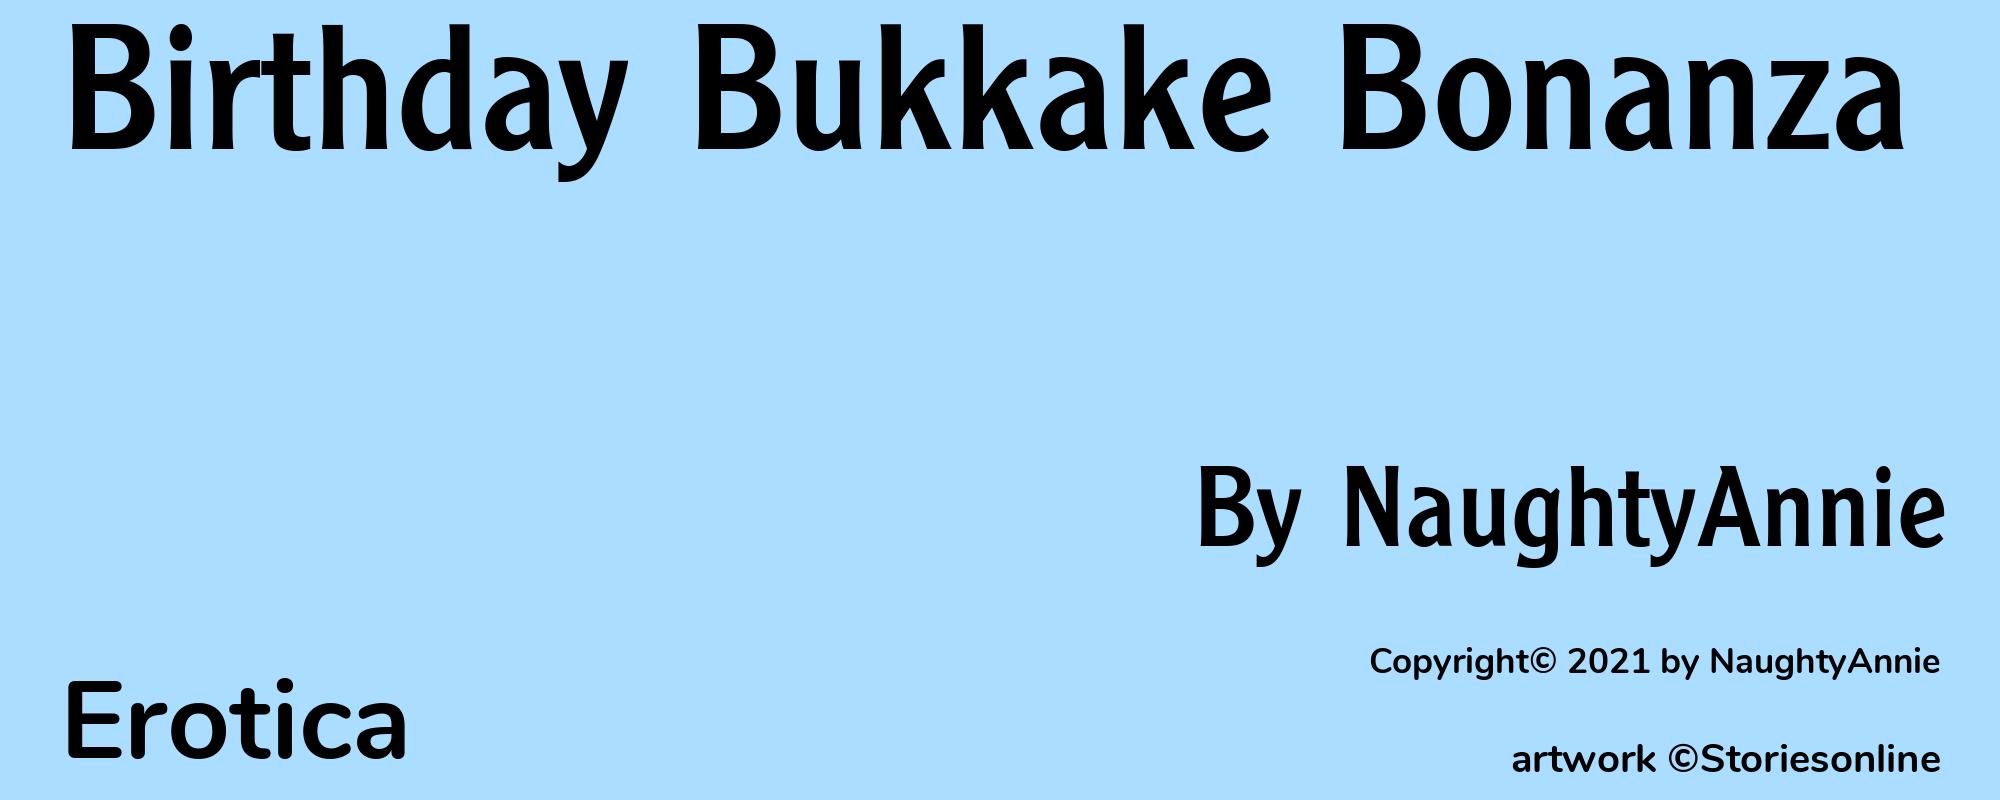 Birthday Bukkake Bonanza - Cover